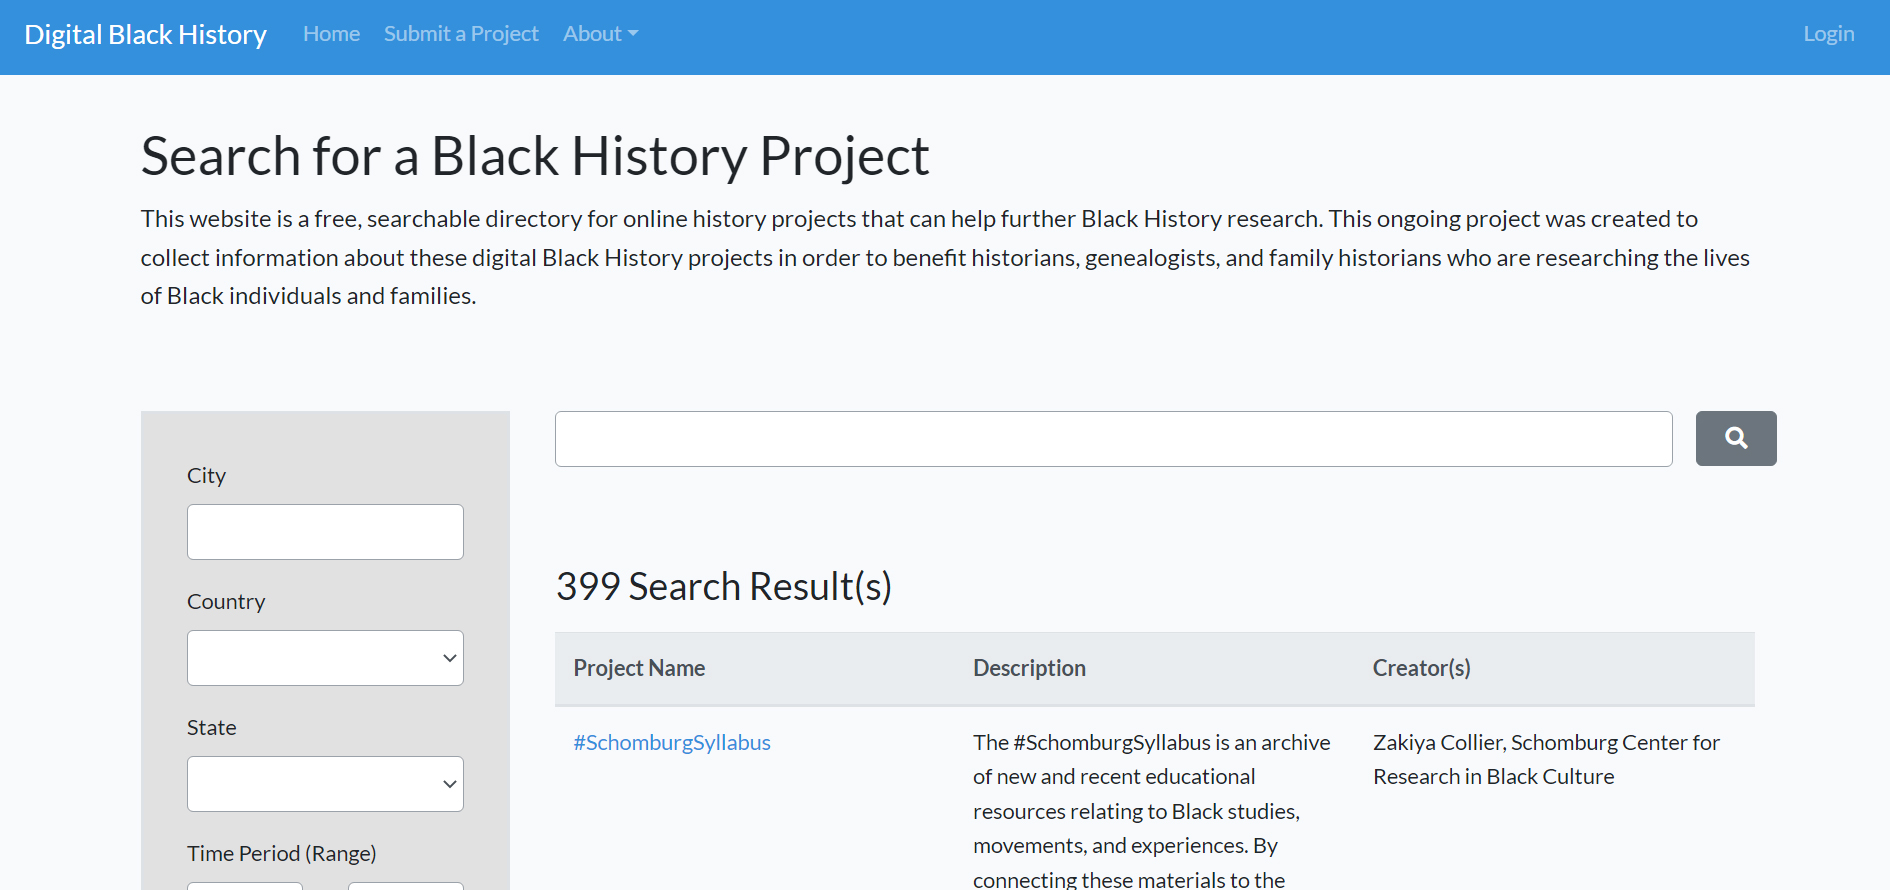 Digital Black History